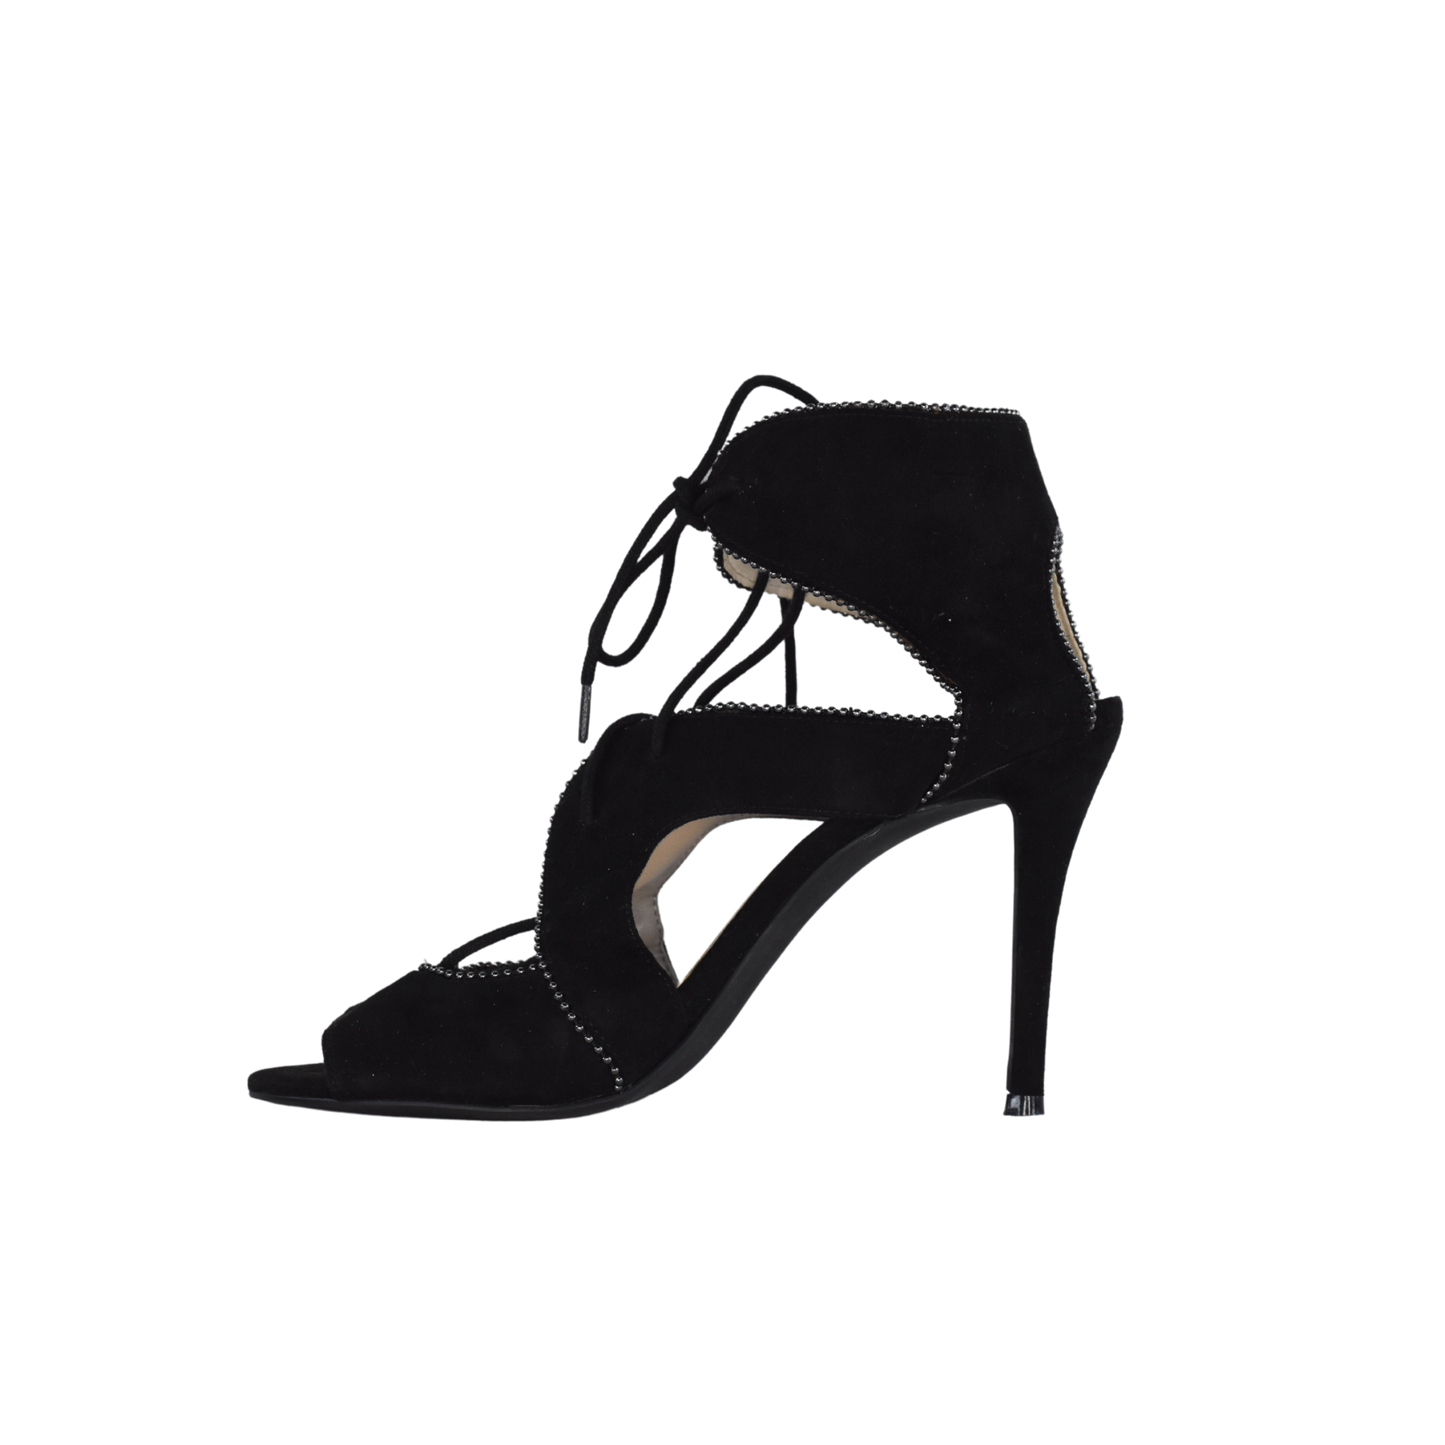 Nine West High Heel Black w Silver Bead Detail Size 8.5 SKU 000131-5